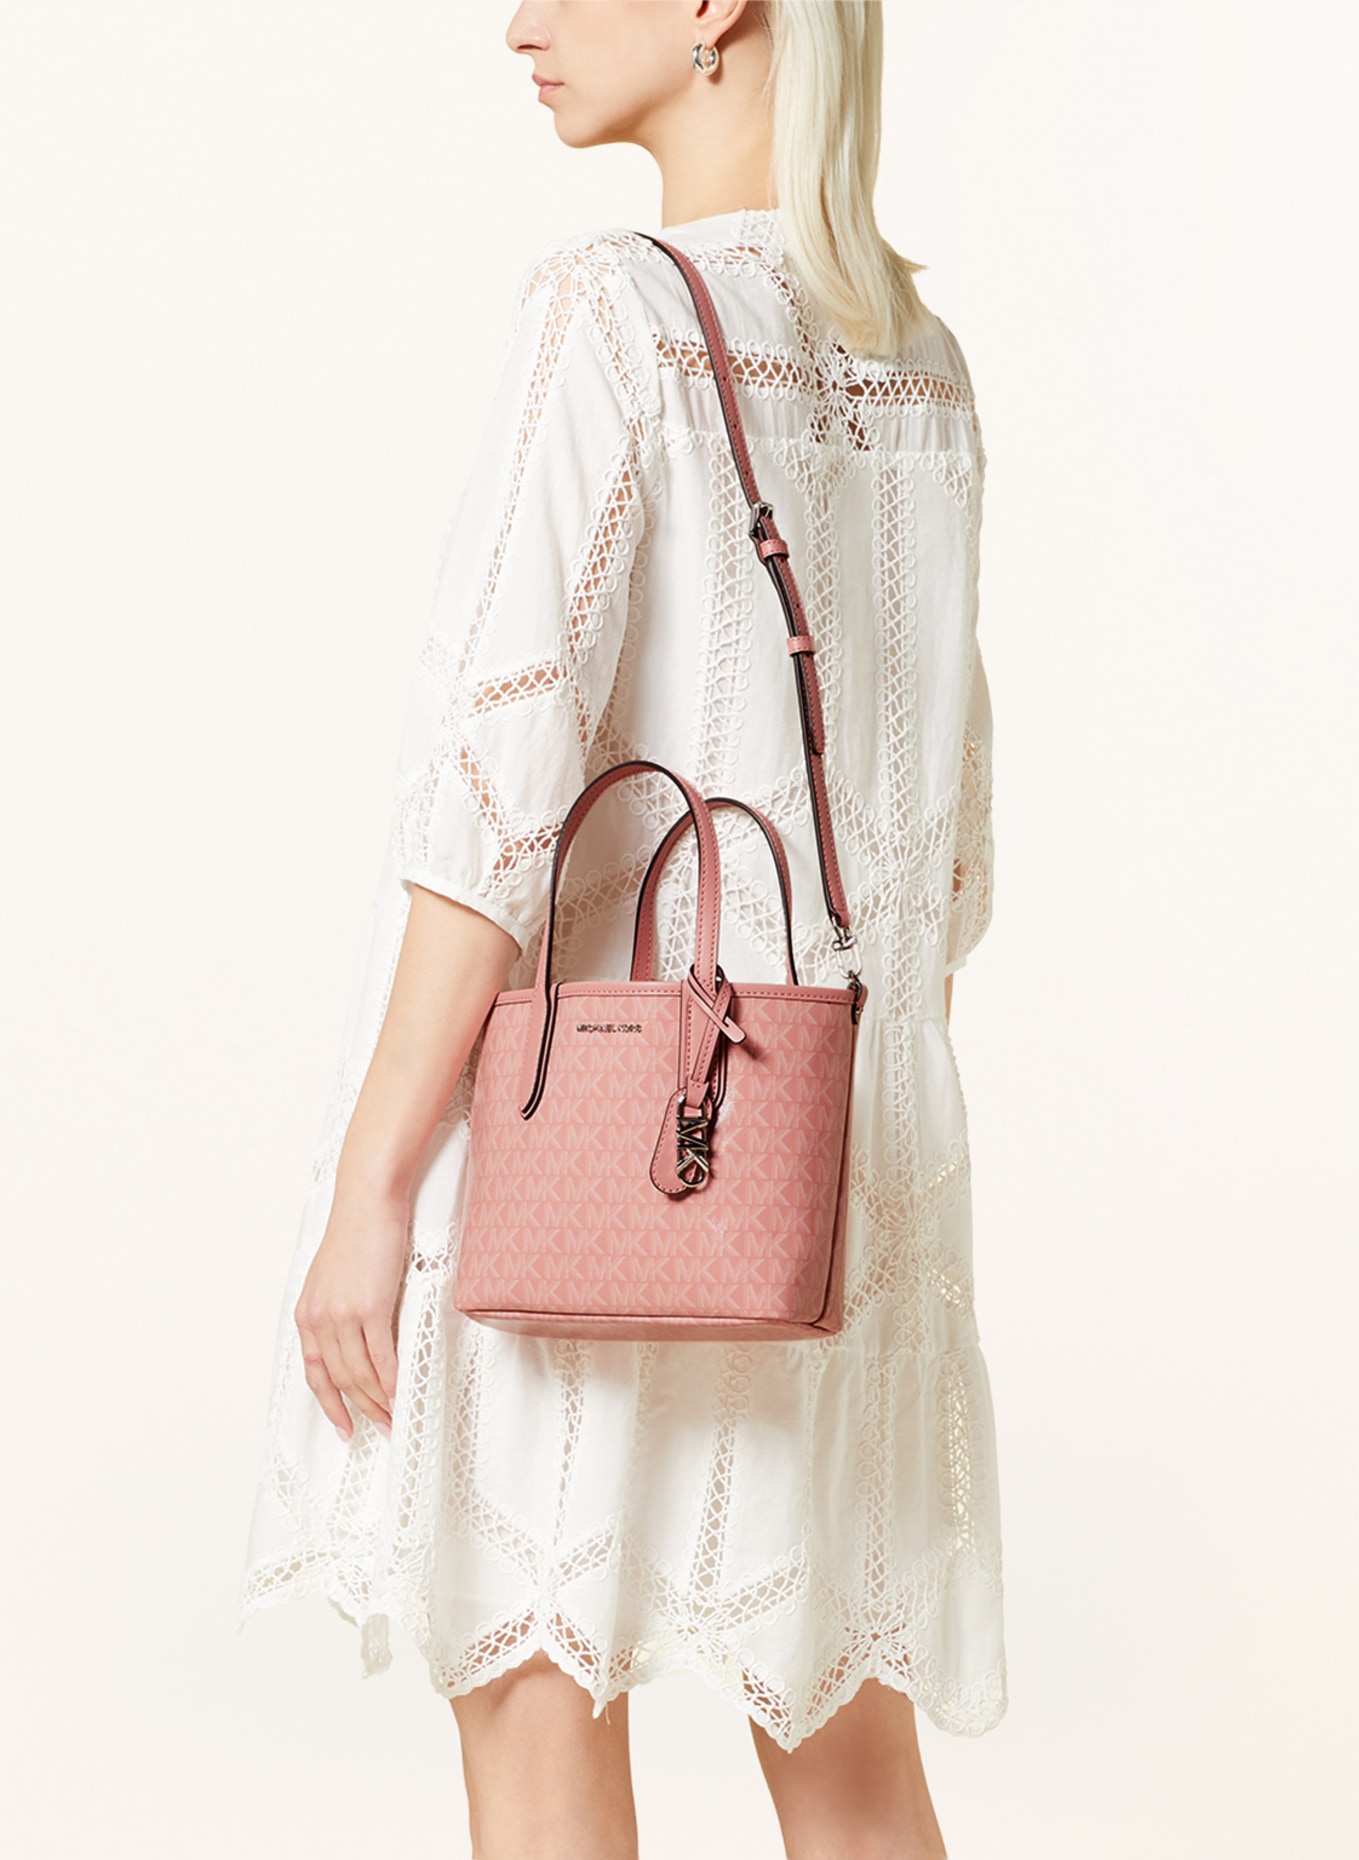 Cute light pink MK purse | Handbags michael kors, Purses michael kors, Bags